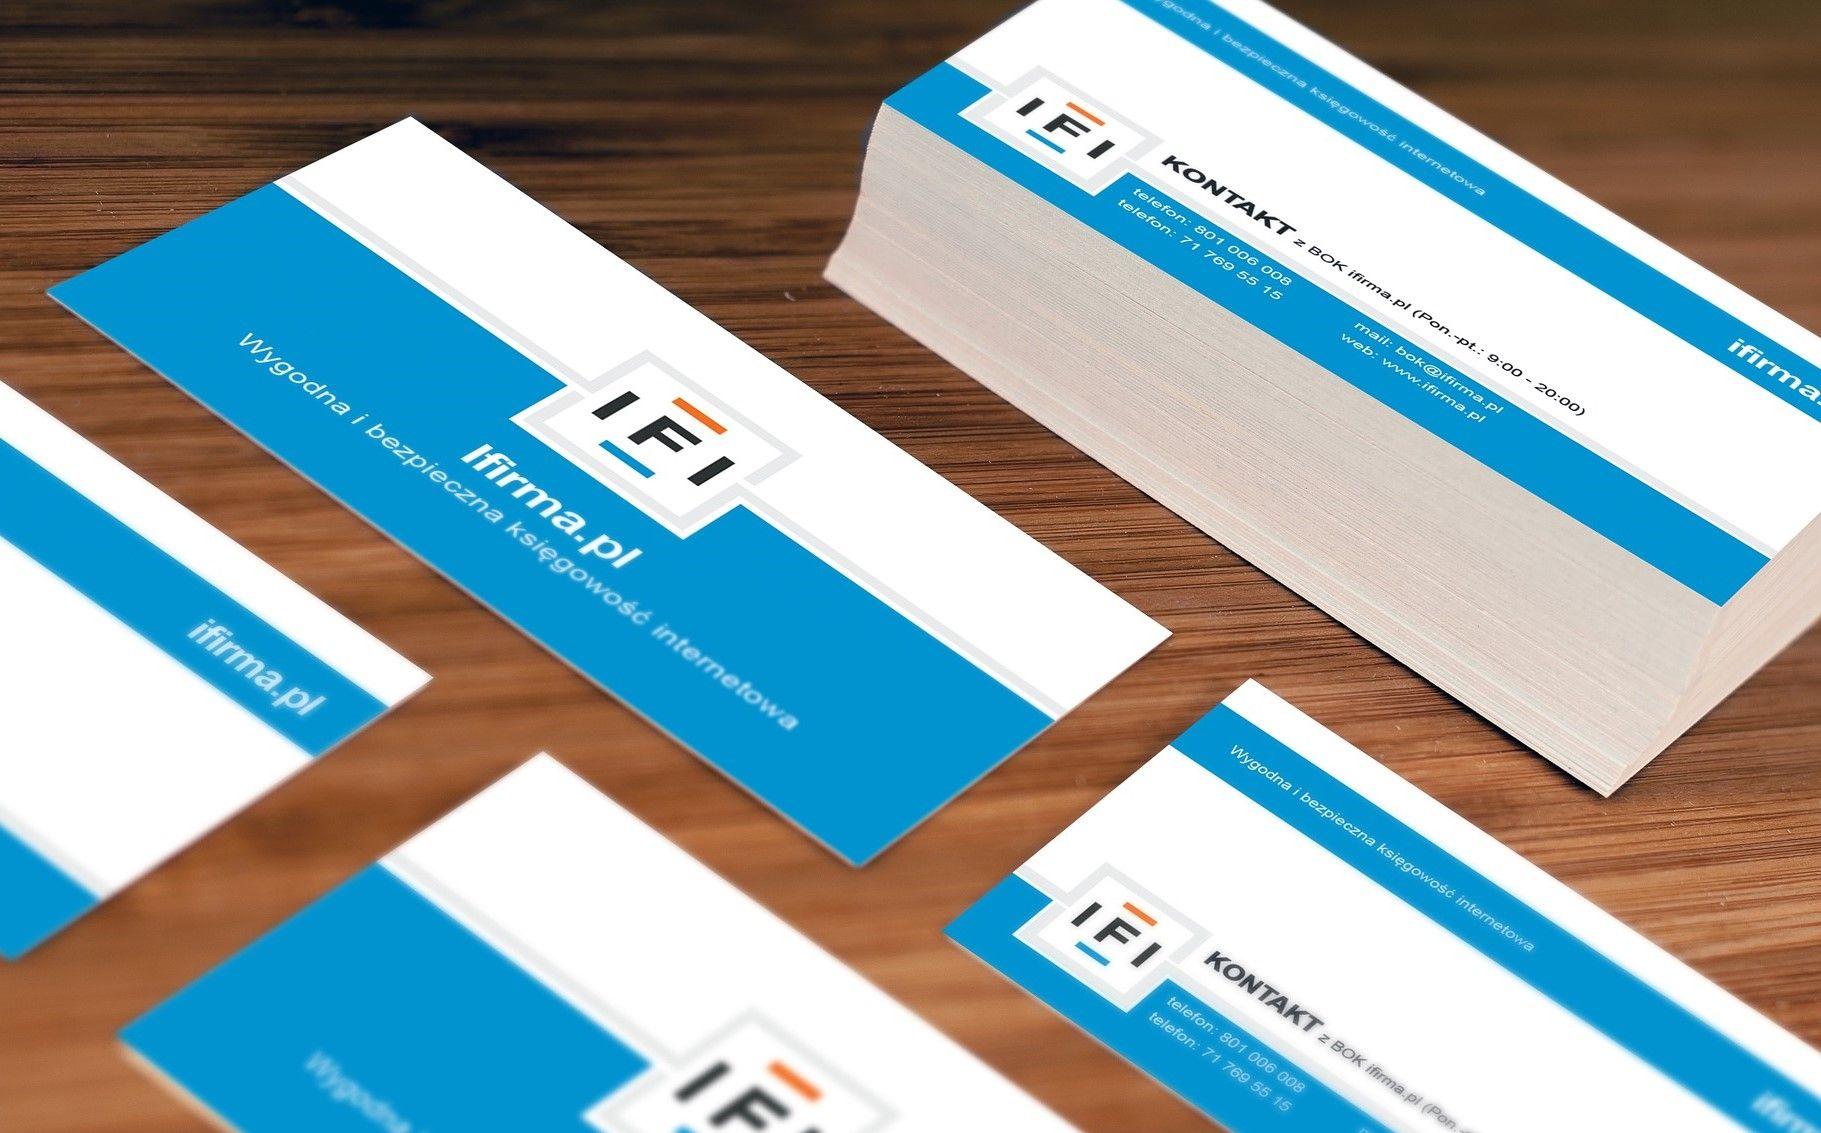 LinkedIn for Business Cards Logo - Famous Find Business Cards Adornment Card Ideas Etadam Info Momo